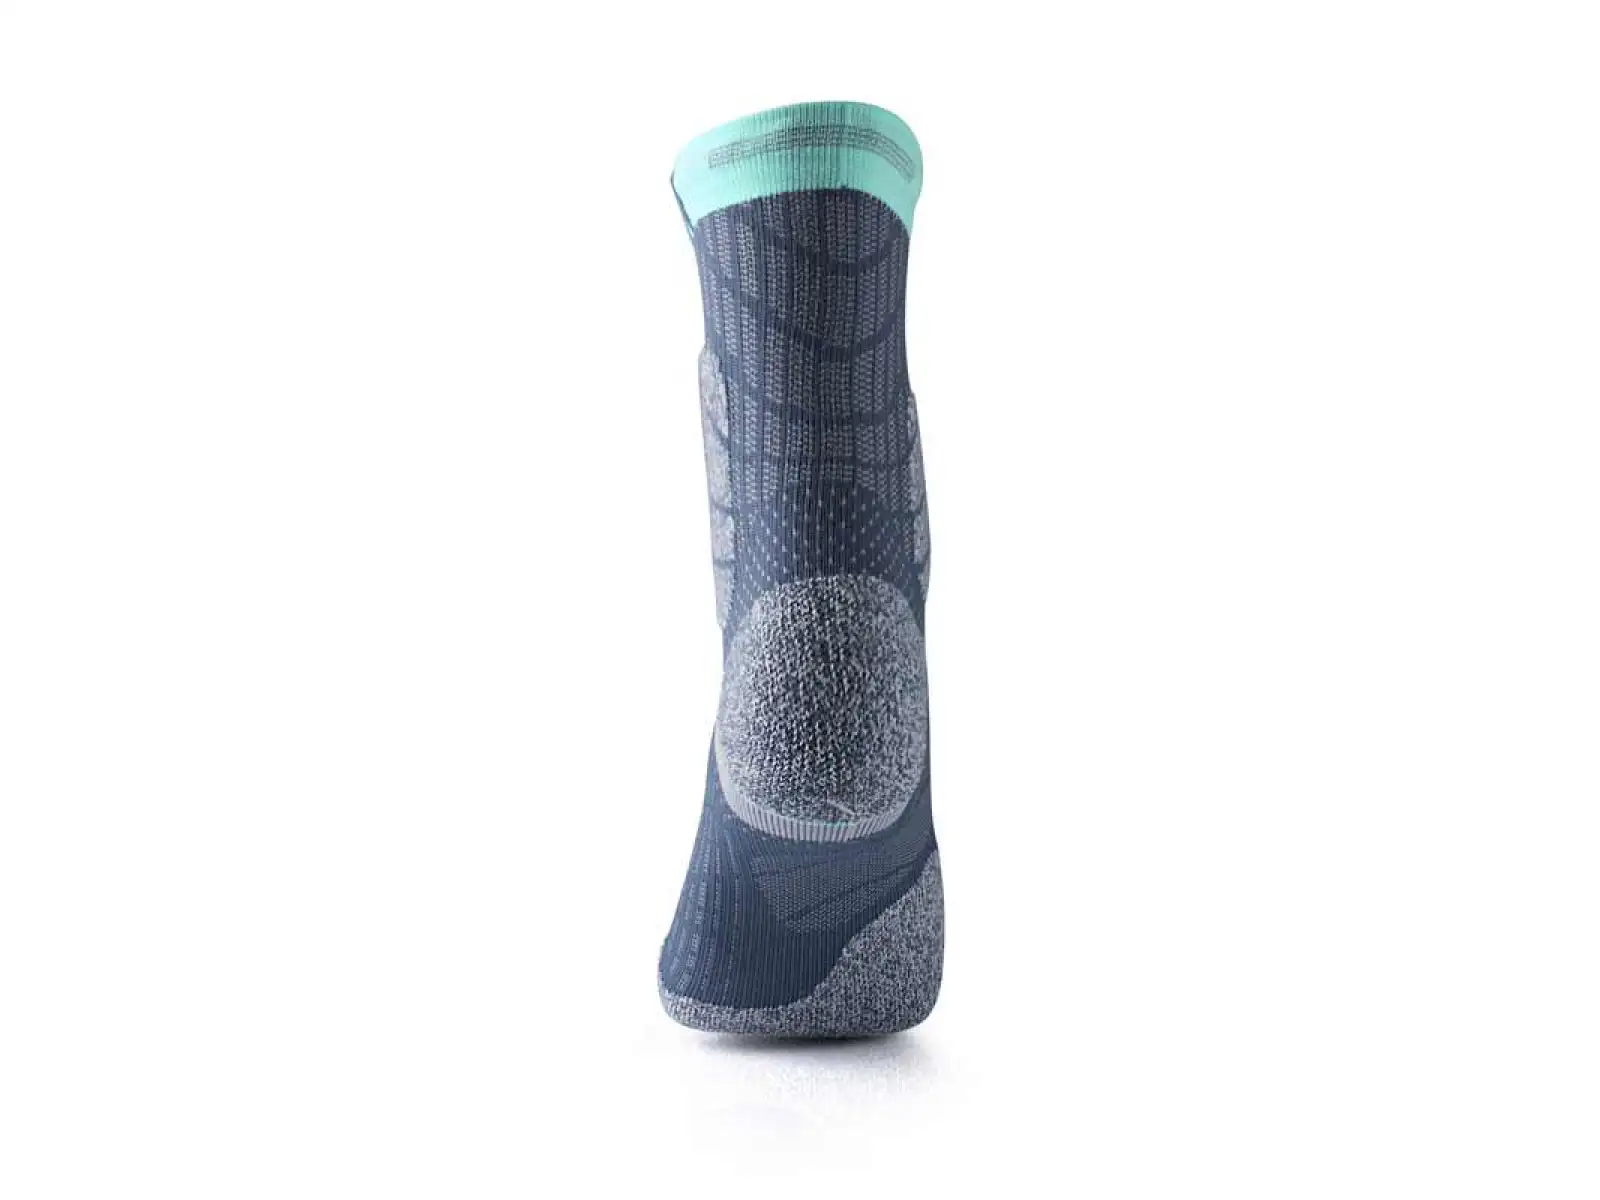 Sidas Trail Protect ponožky Grey/Turquoise